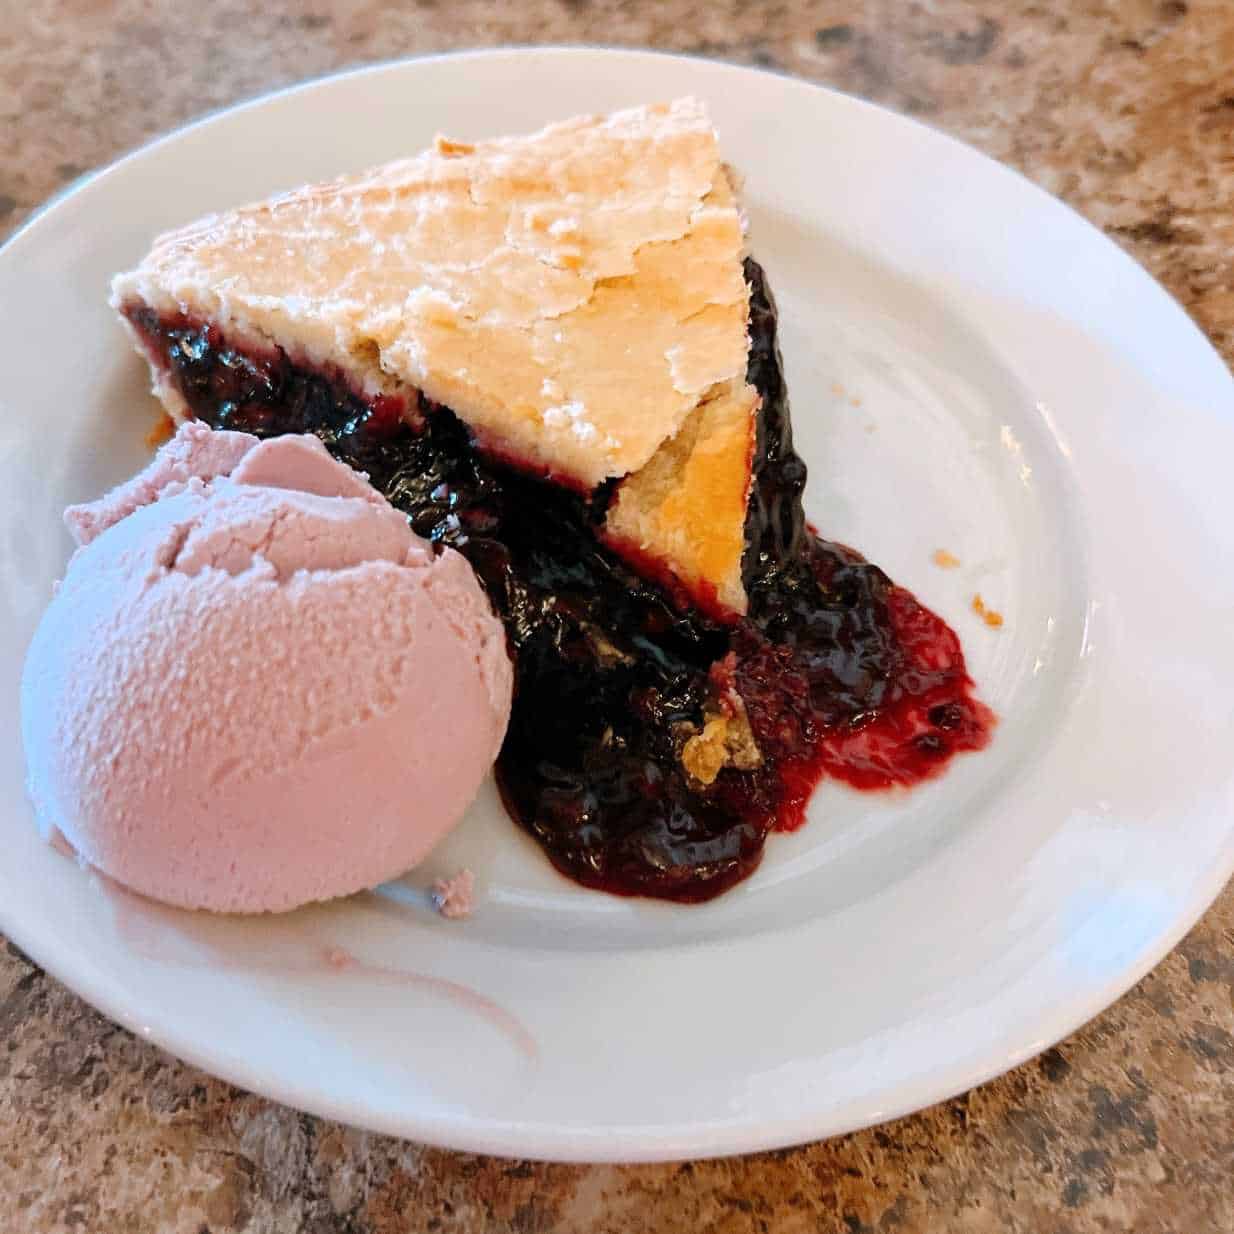 Boysenberry Pie and Boysenberry Ice Cream at Knott's Berry Farm